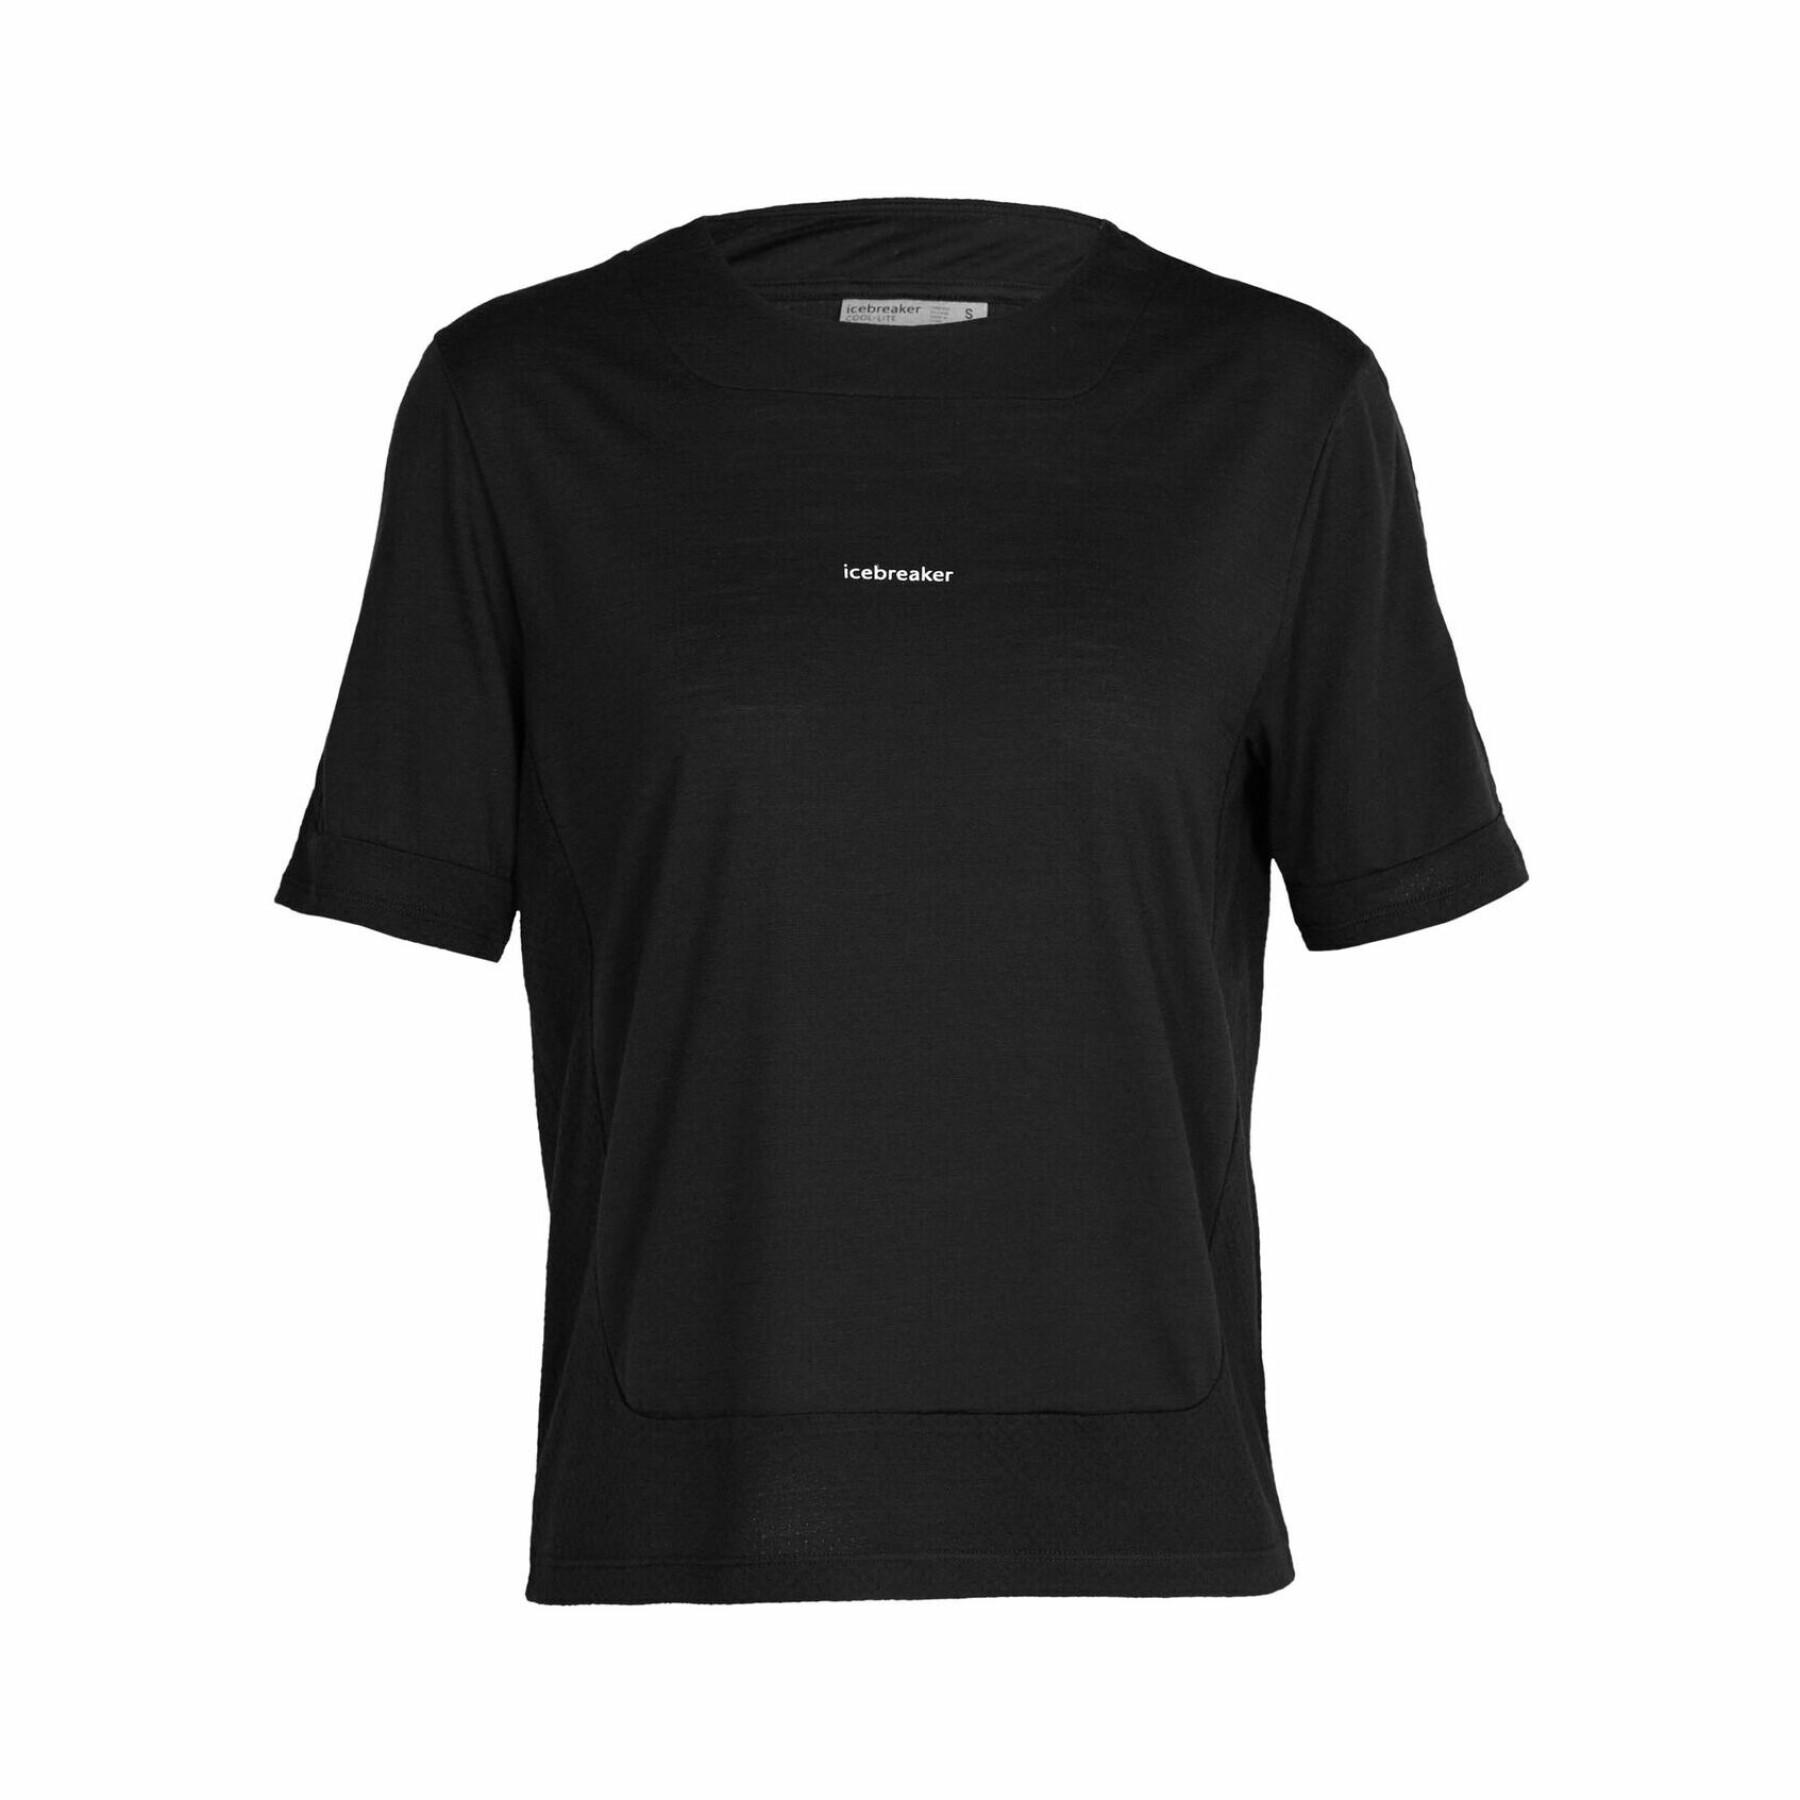 Dames-T-shirt Icebreaker zoneknit